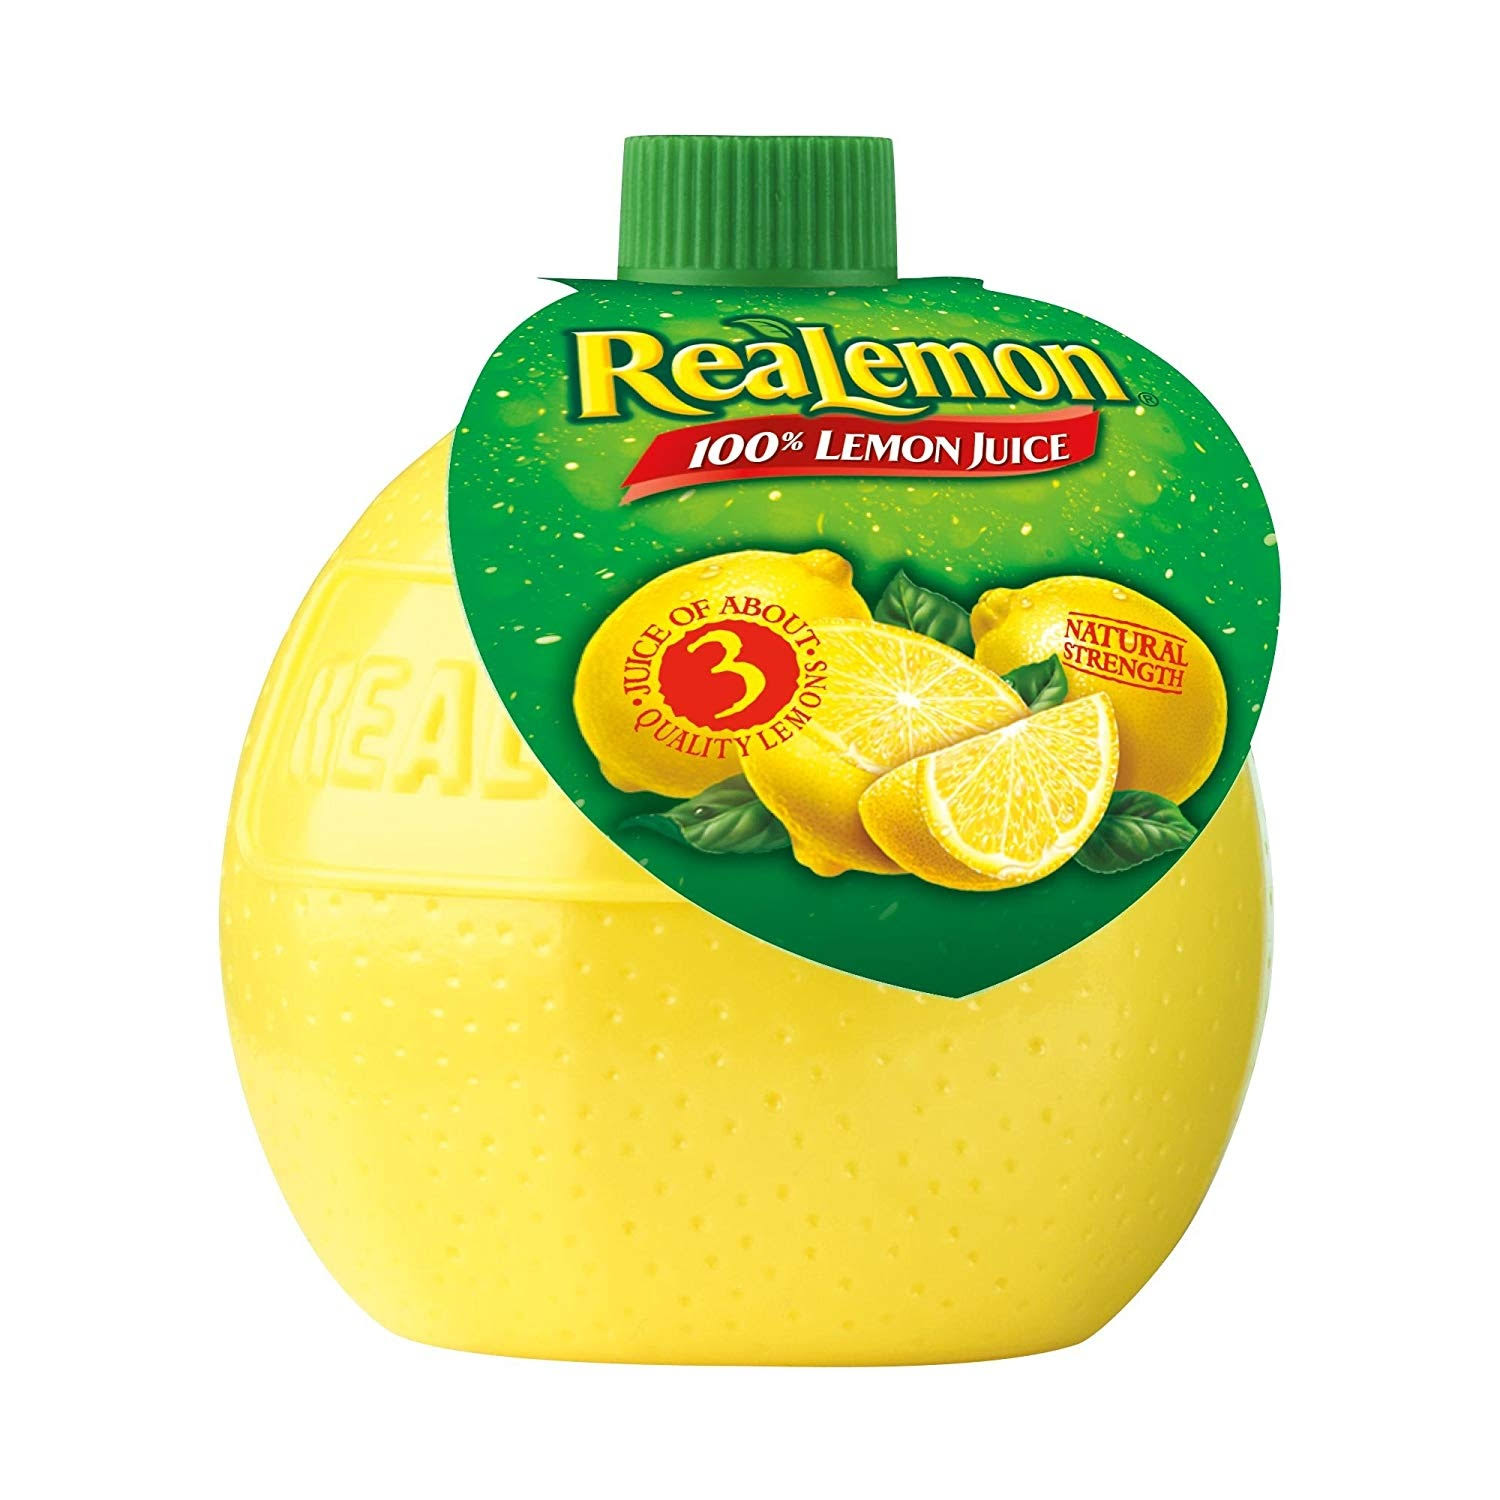 ReaLemon 100% Lemon Juice - 4.5 fl oz